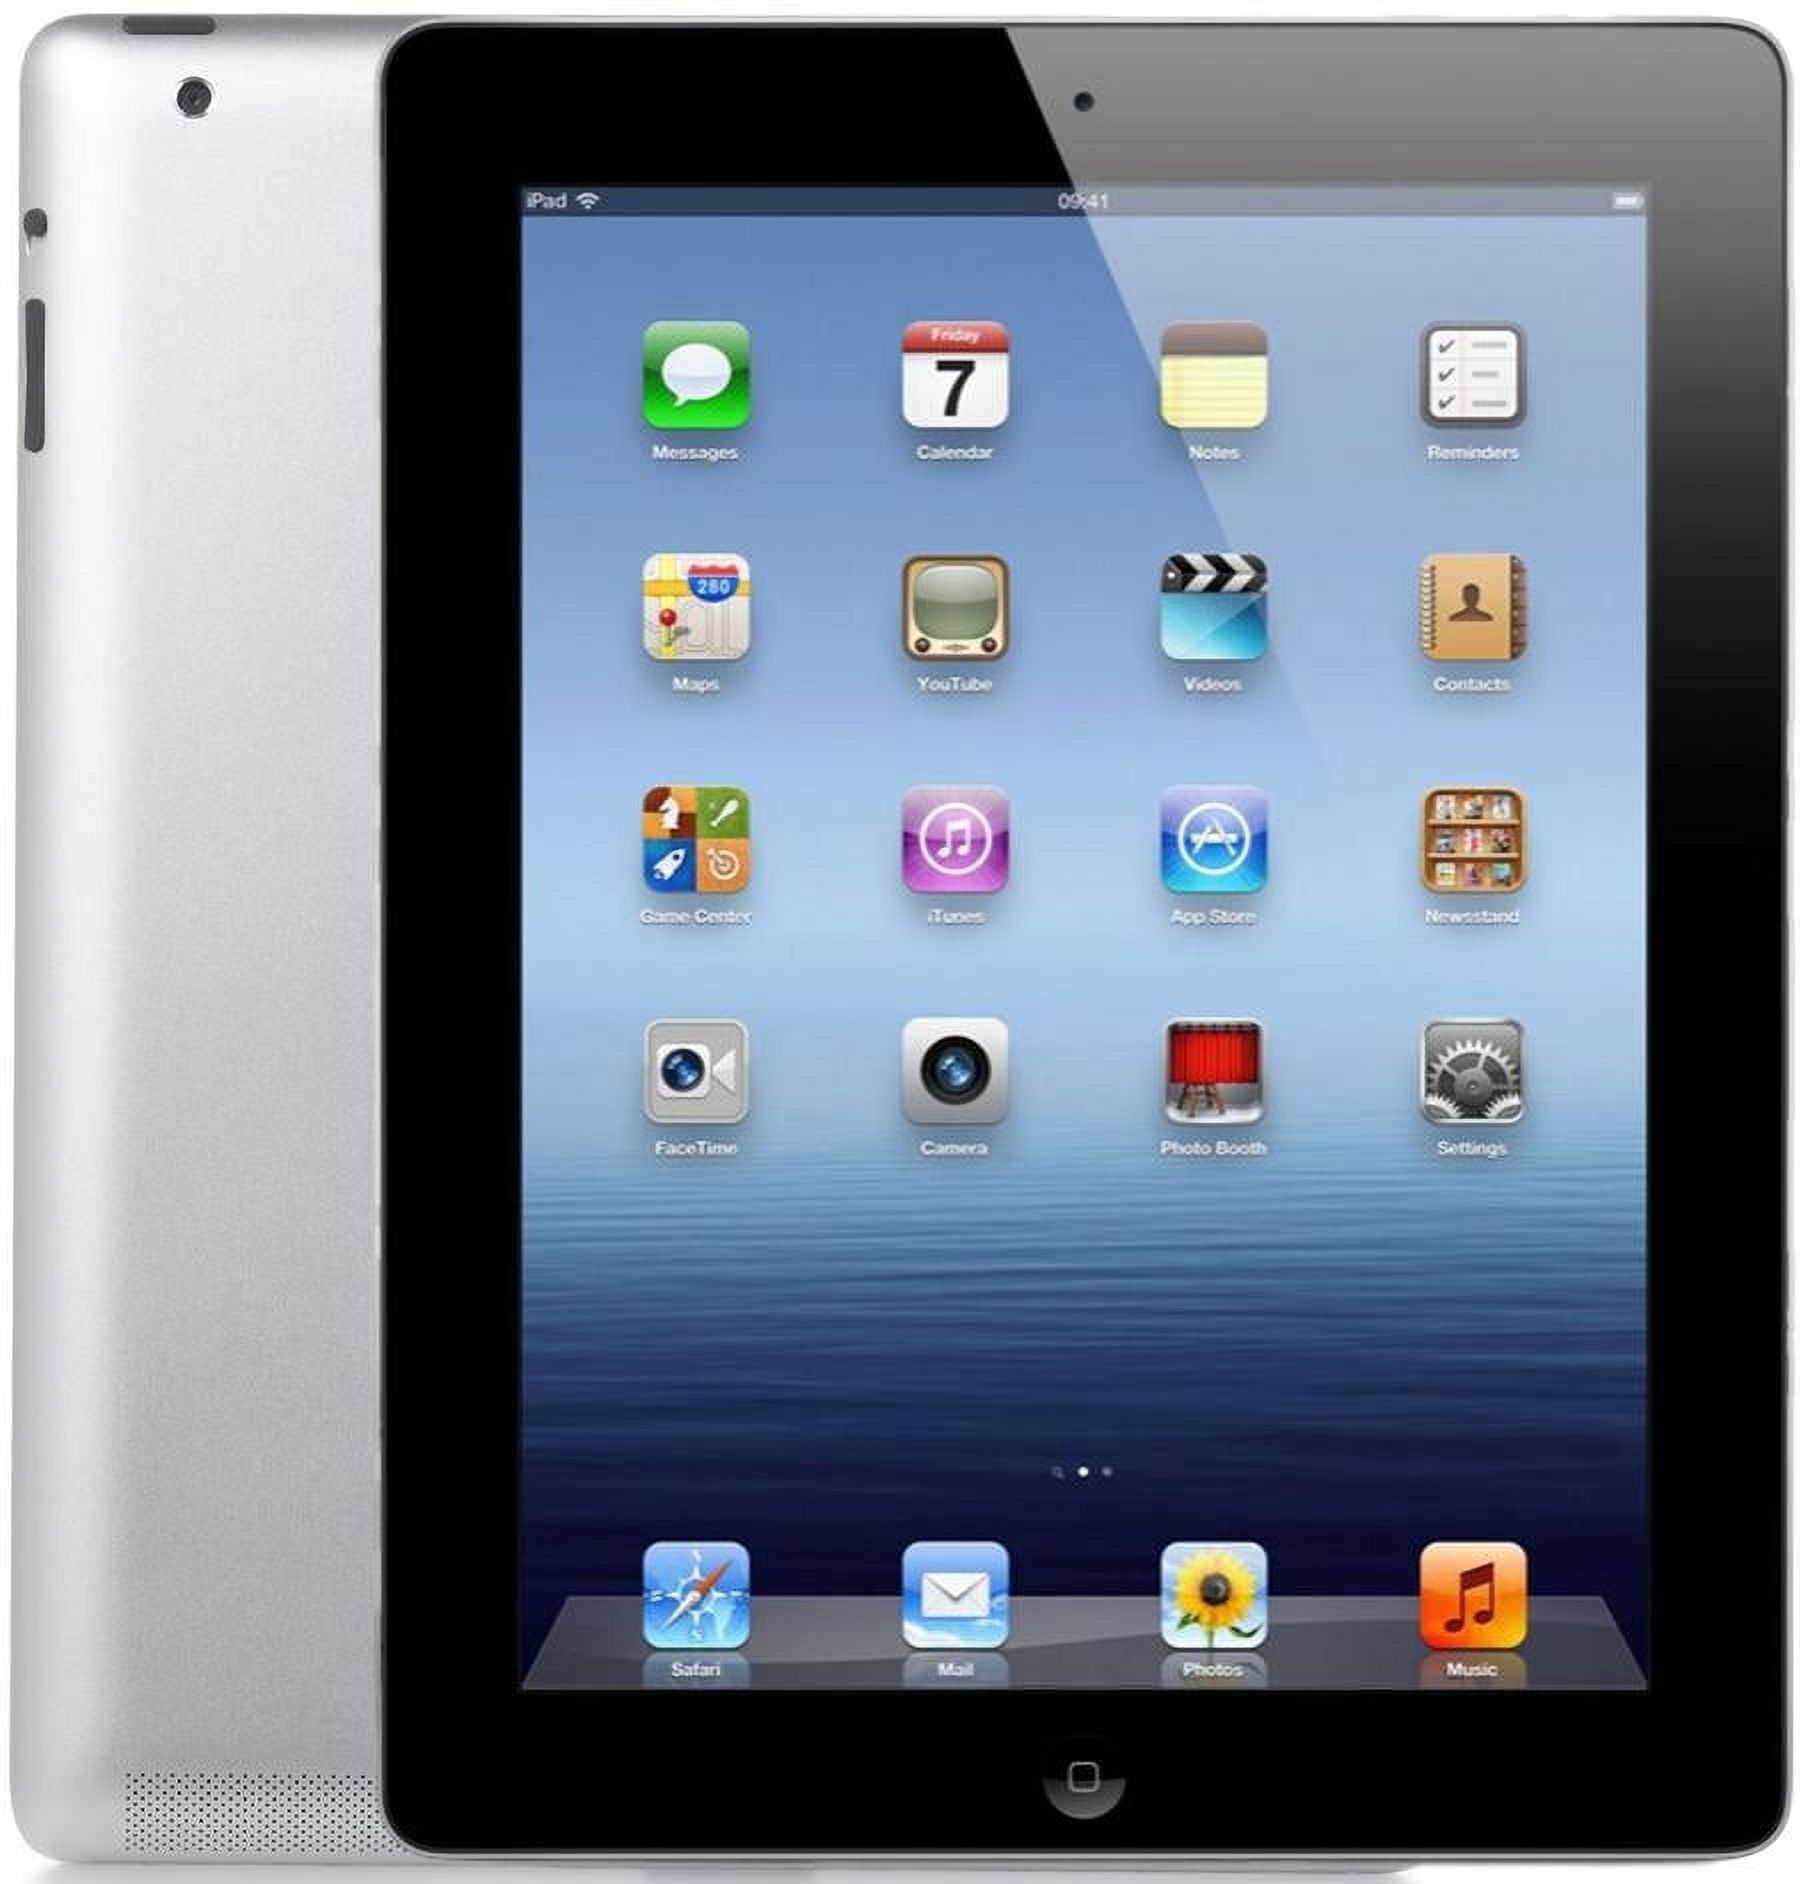 Restored Apple iPad 2 9.7" Display 16GB Wi-Fi OnlyTabel PC (Black) - MC769LL/A (Refurbished) - image 2 of 7